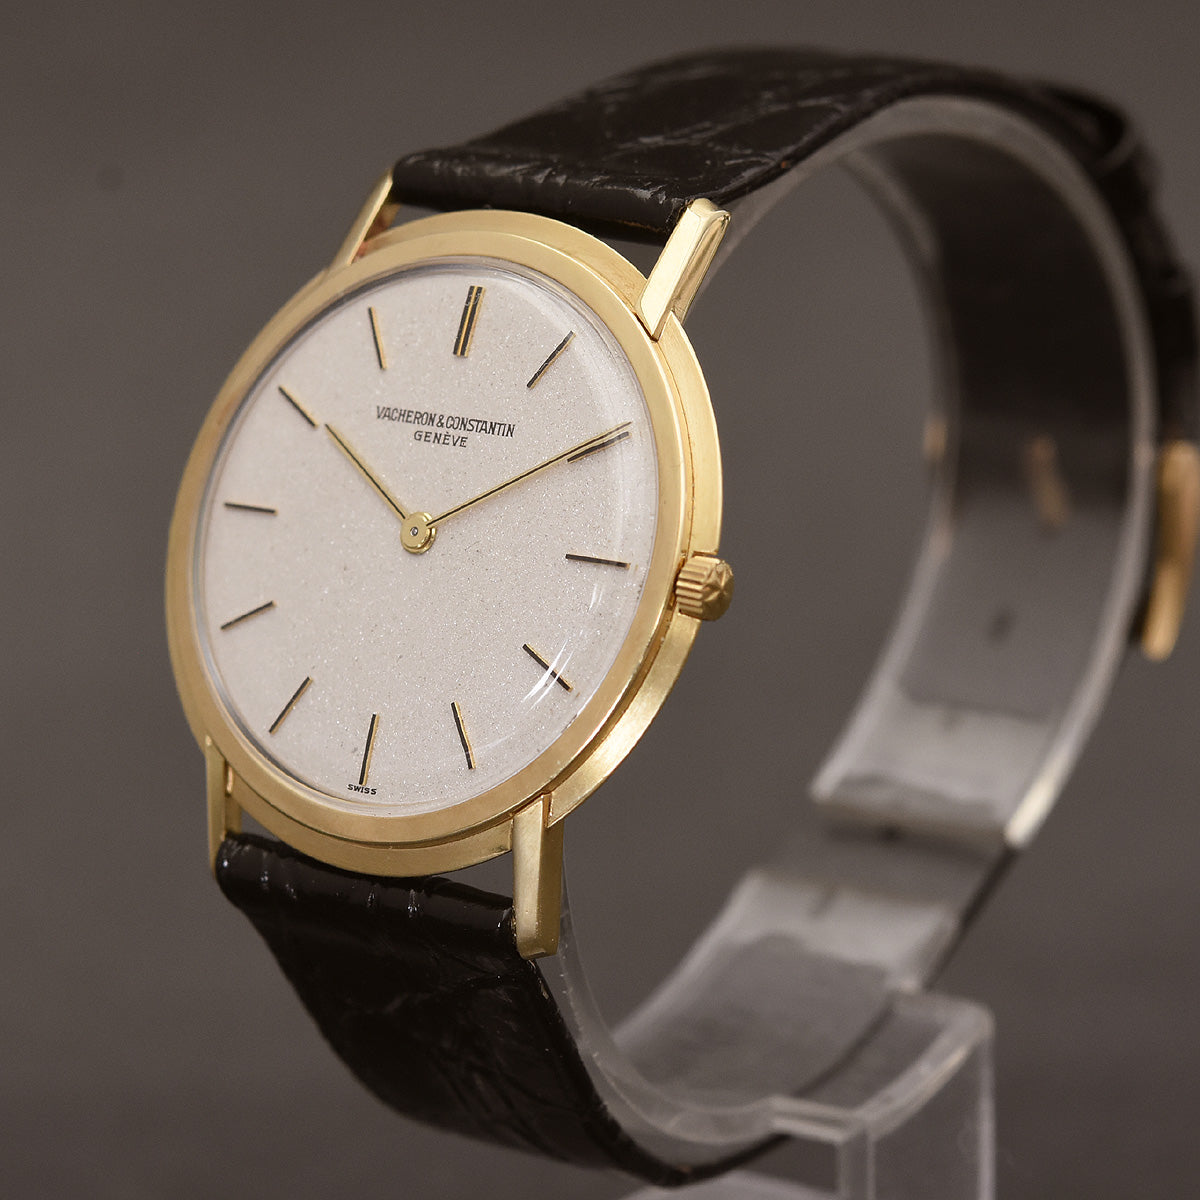 1957 VACHERON & CONSTANTIN Ref. 6100 18K Gold Ultra-Slim Evening Watch